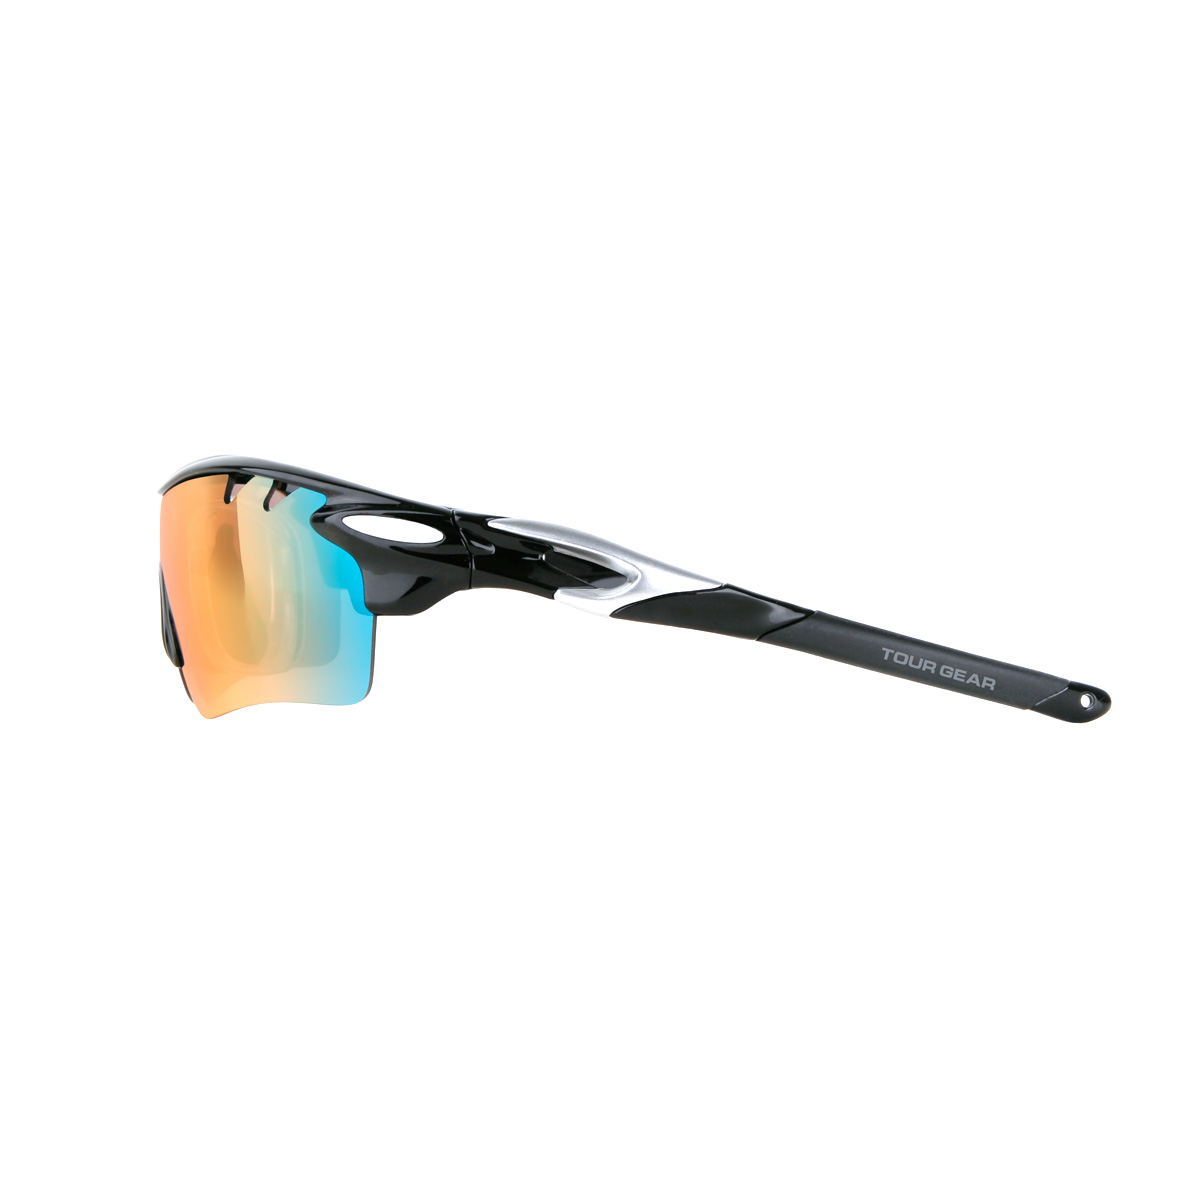 NEW Tour Gear Gloss Black Interchangeable Golf/Sports Sunglasses w/5 Lenses - image 3 of 5